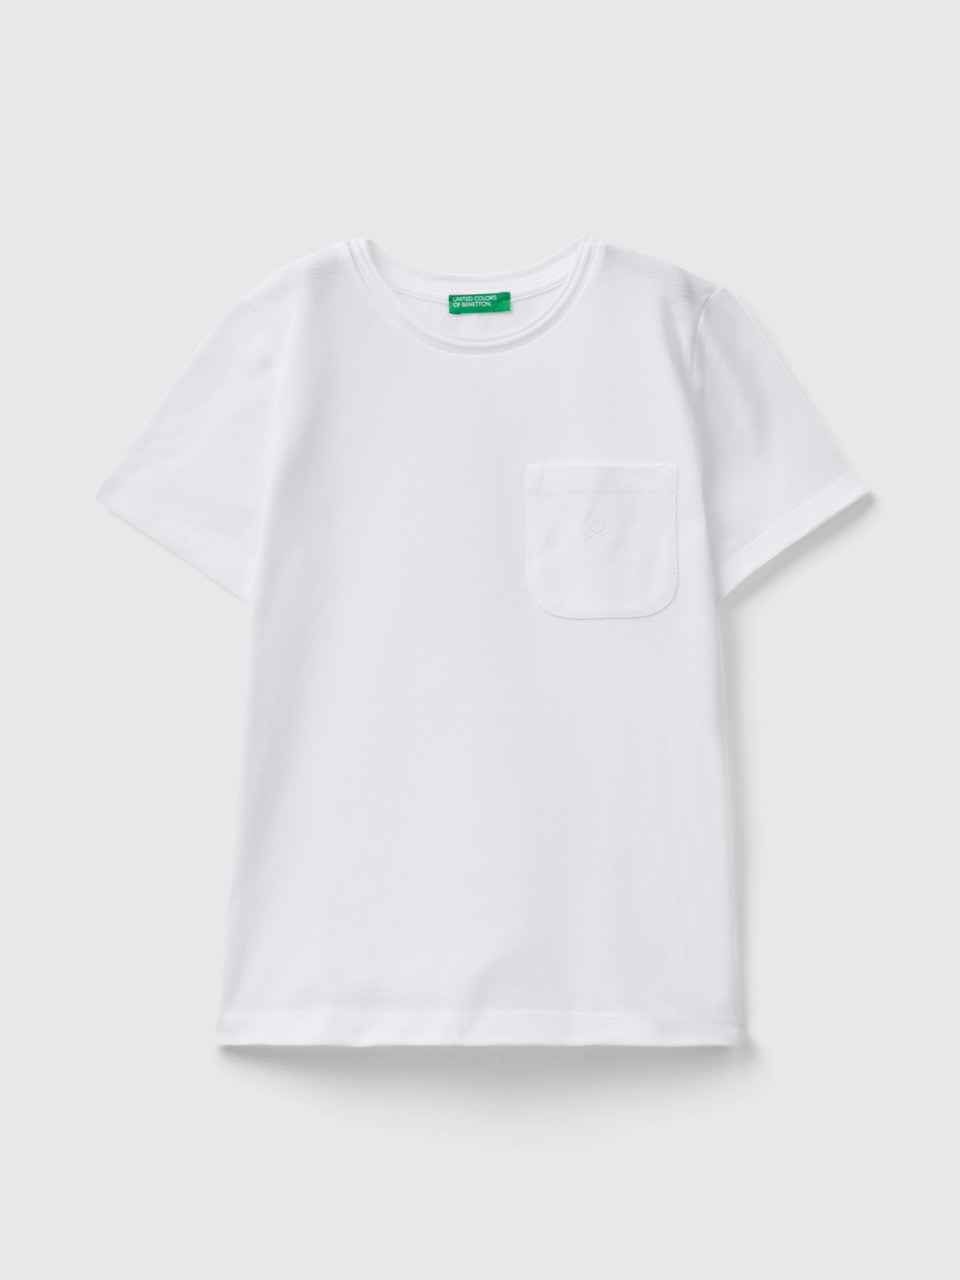 Benetton, T-shirt With Pocket, White, Kids